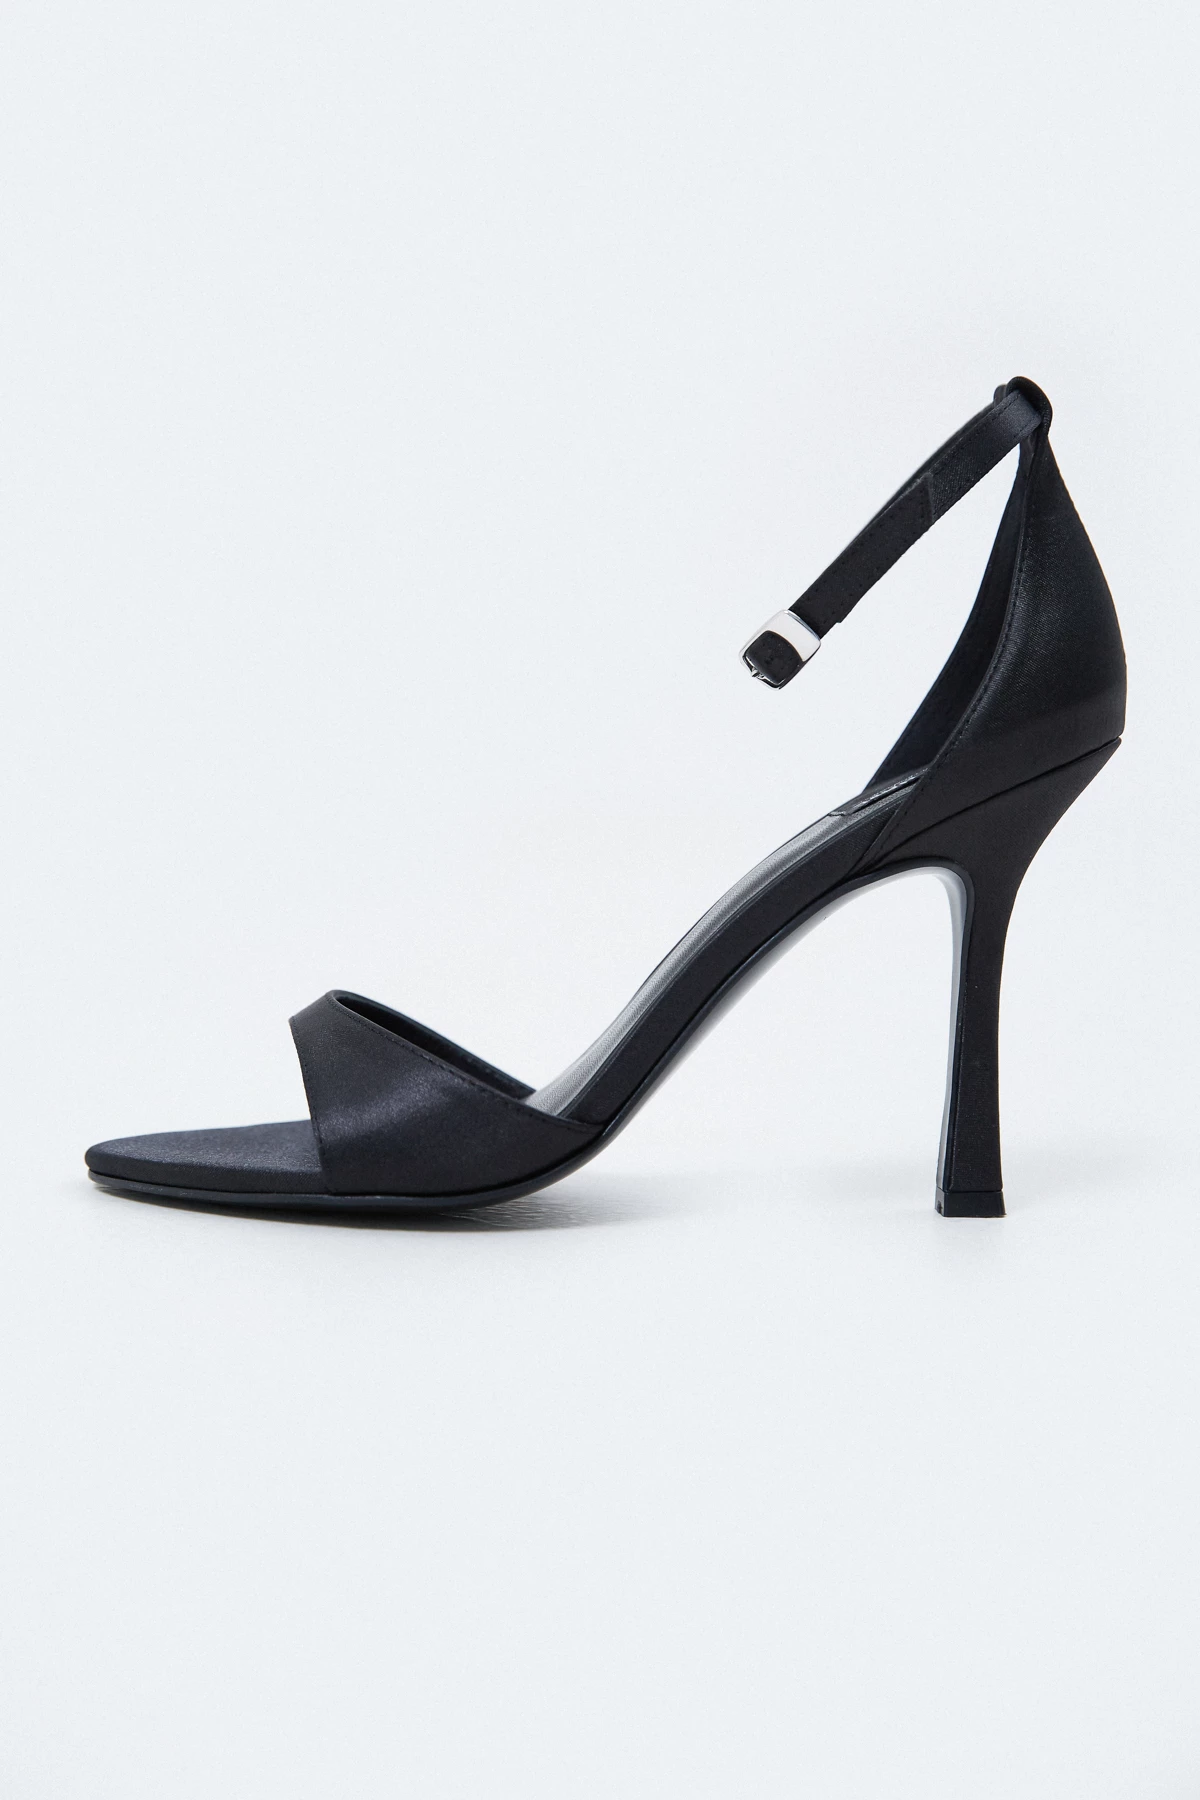 Black satin heels, photo 1